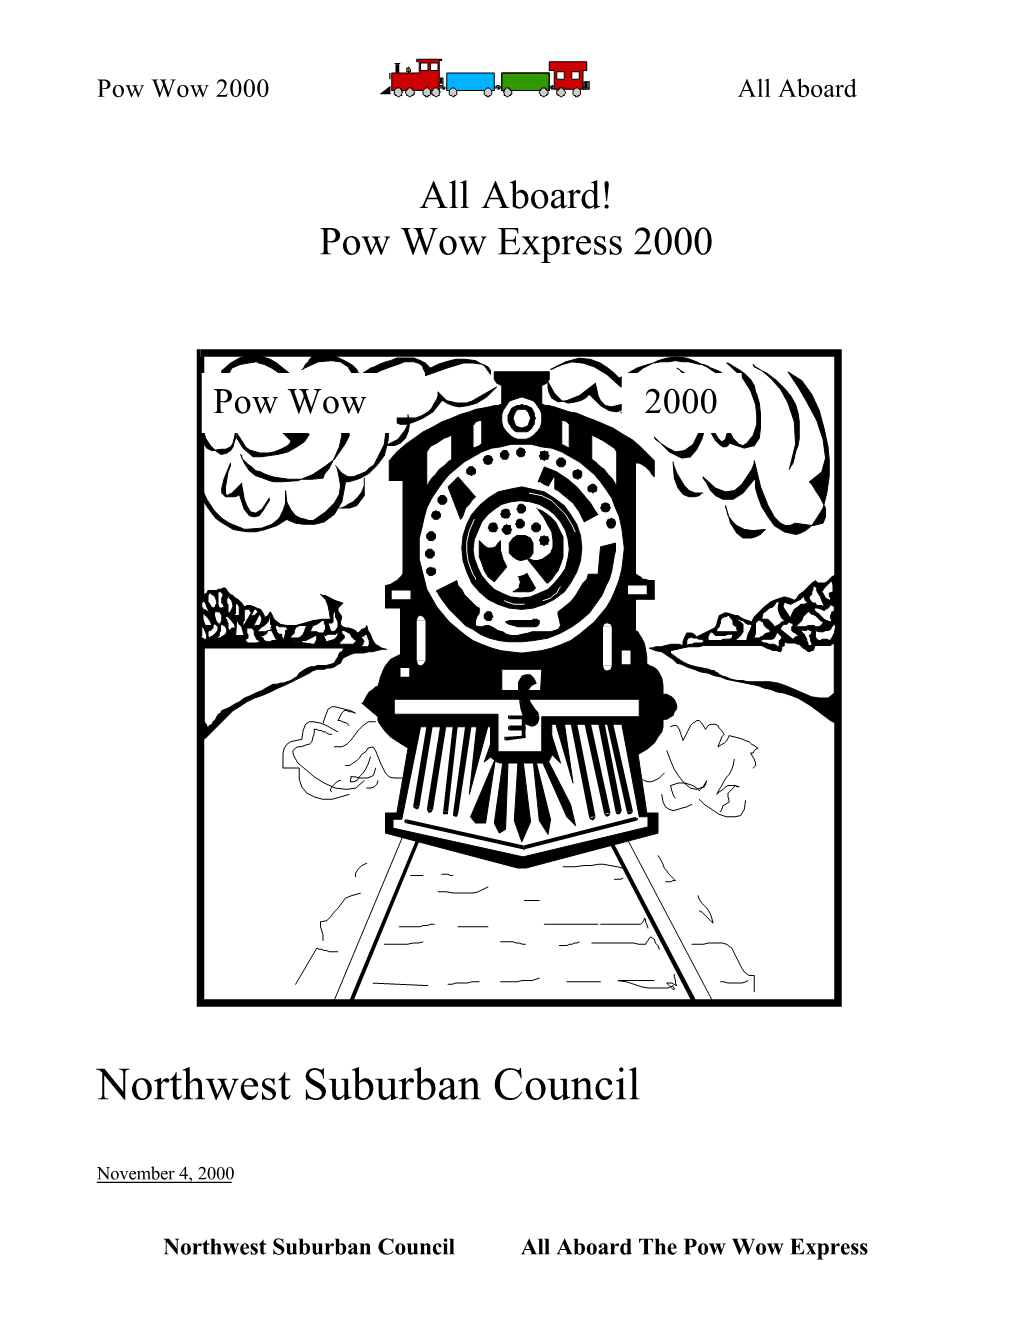 Northwest Suburban Council